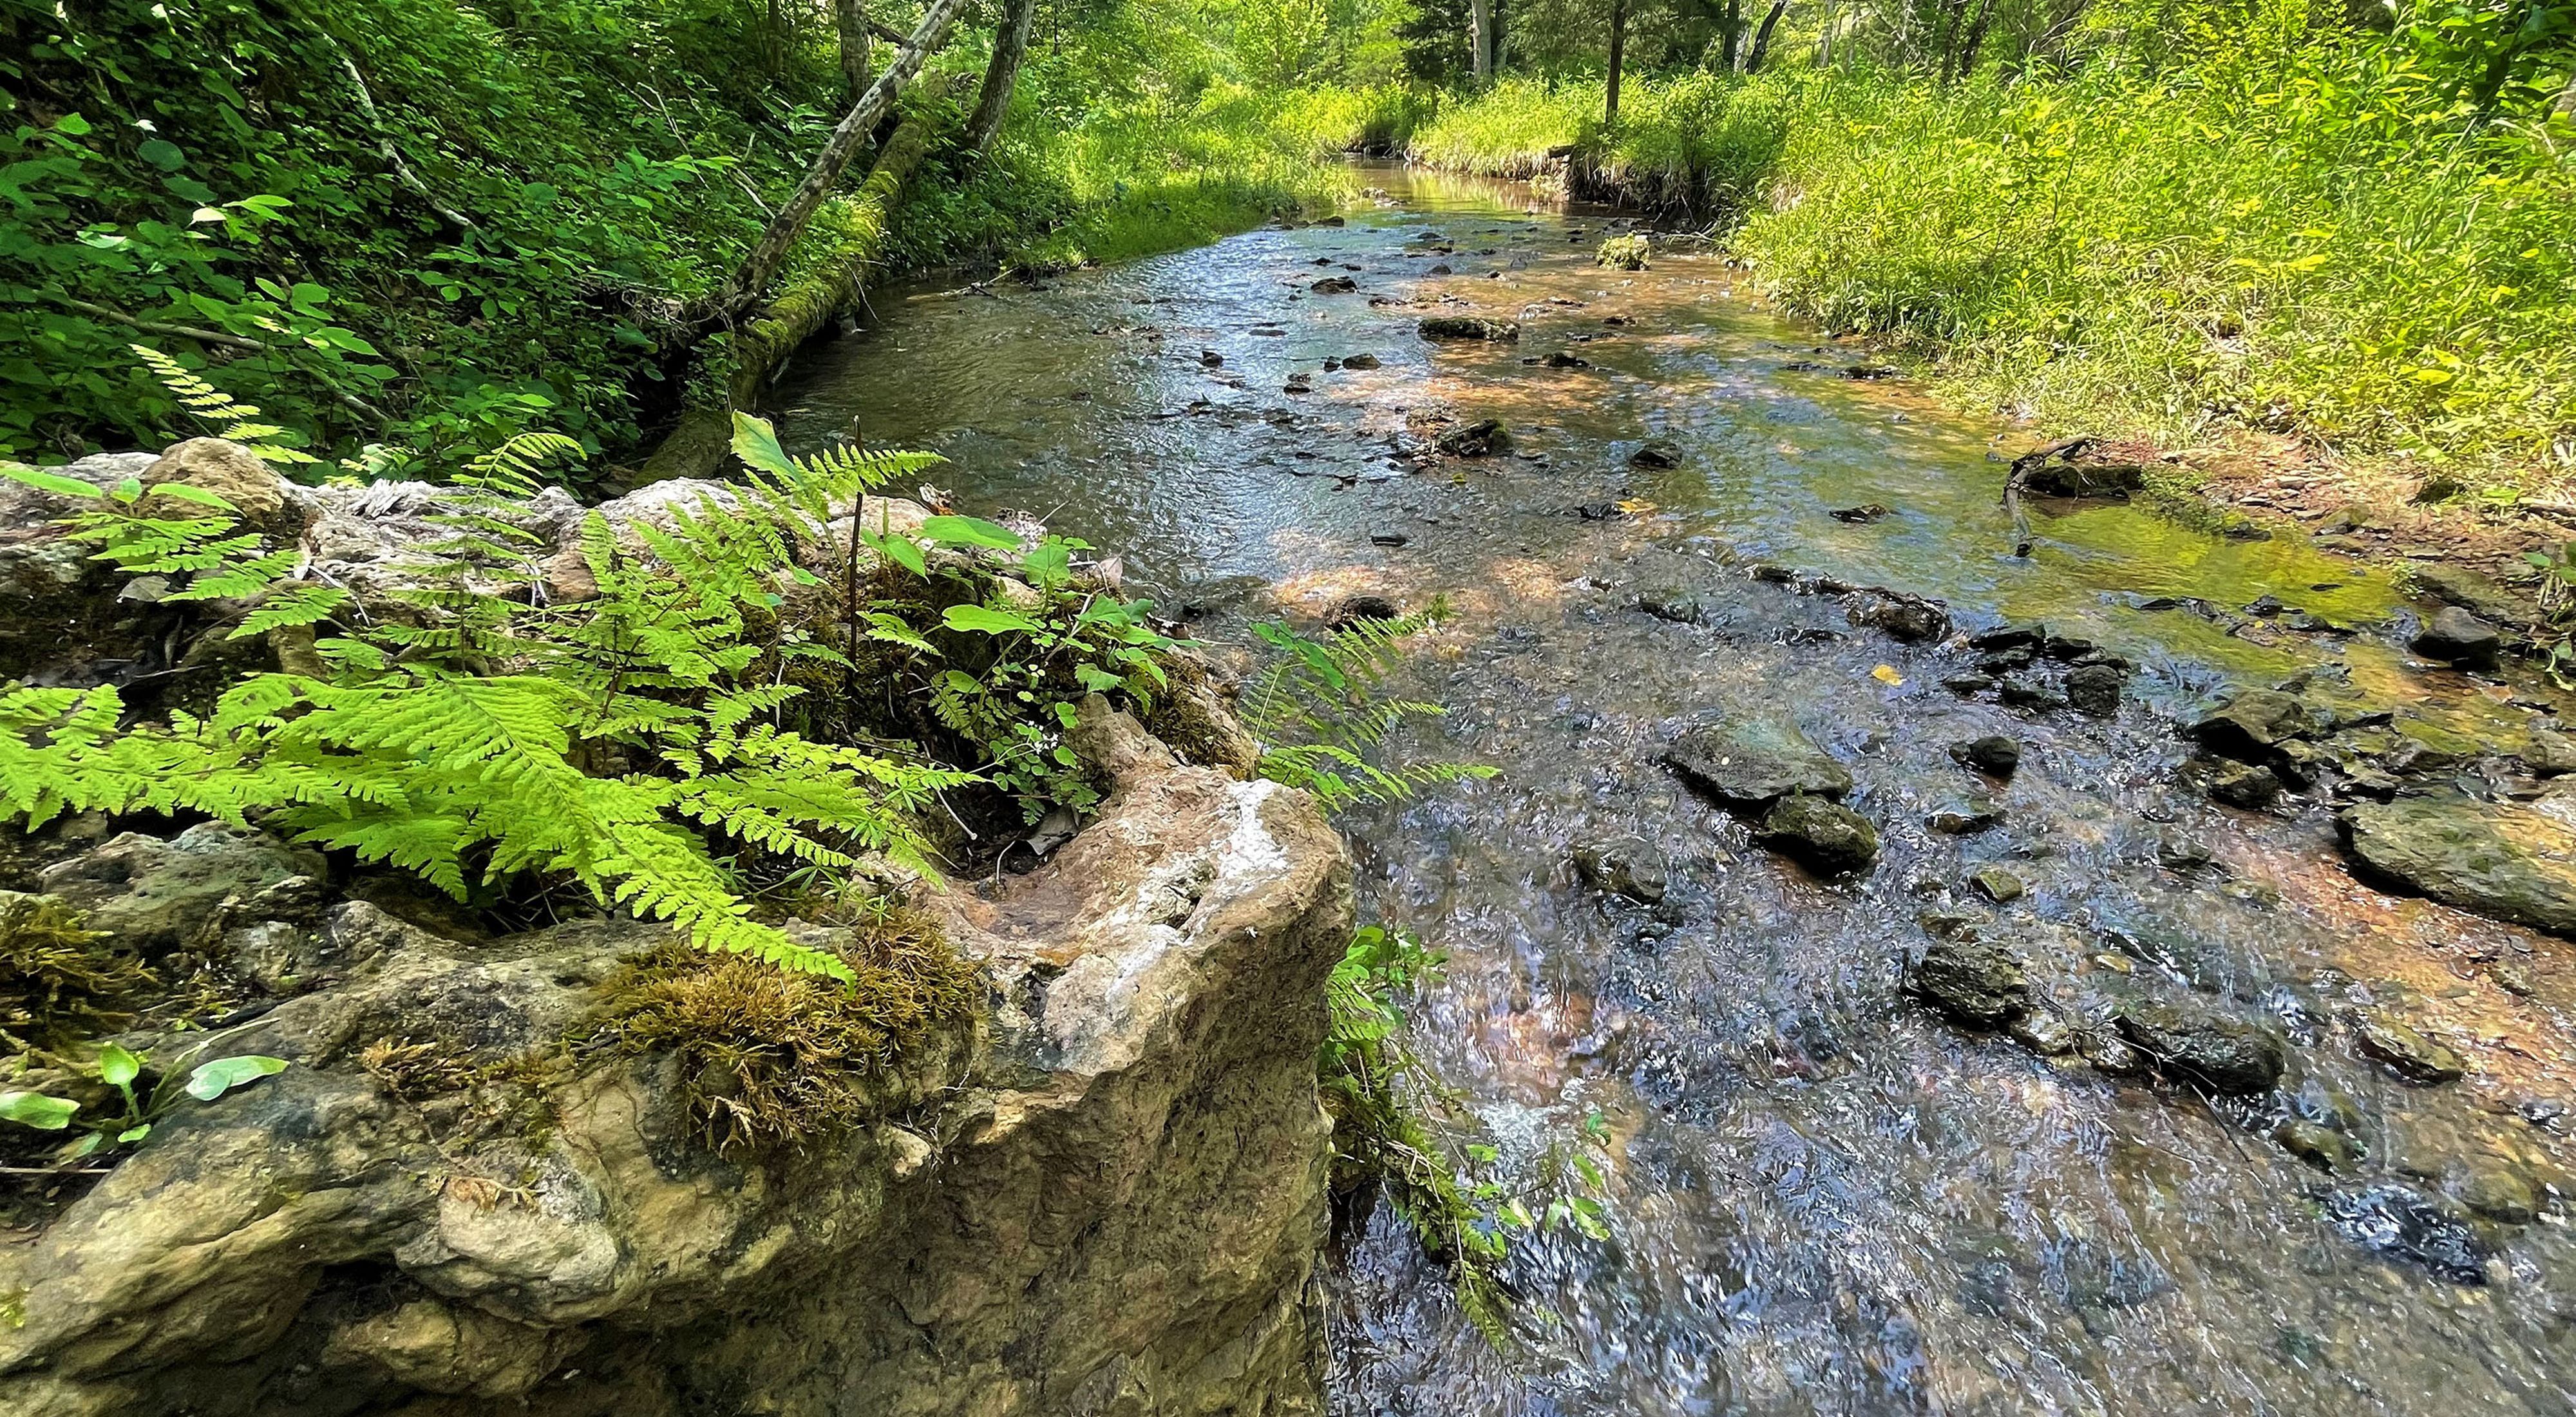 Stream flows through lush green forest at Edge of Appalachia Preserve.